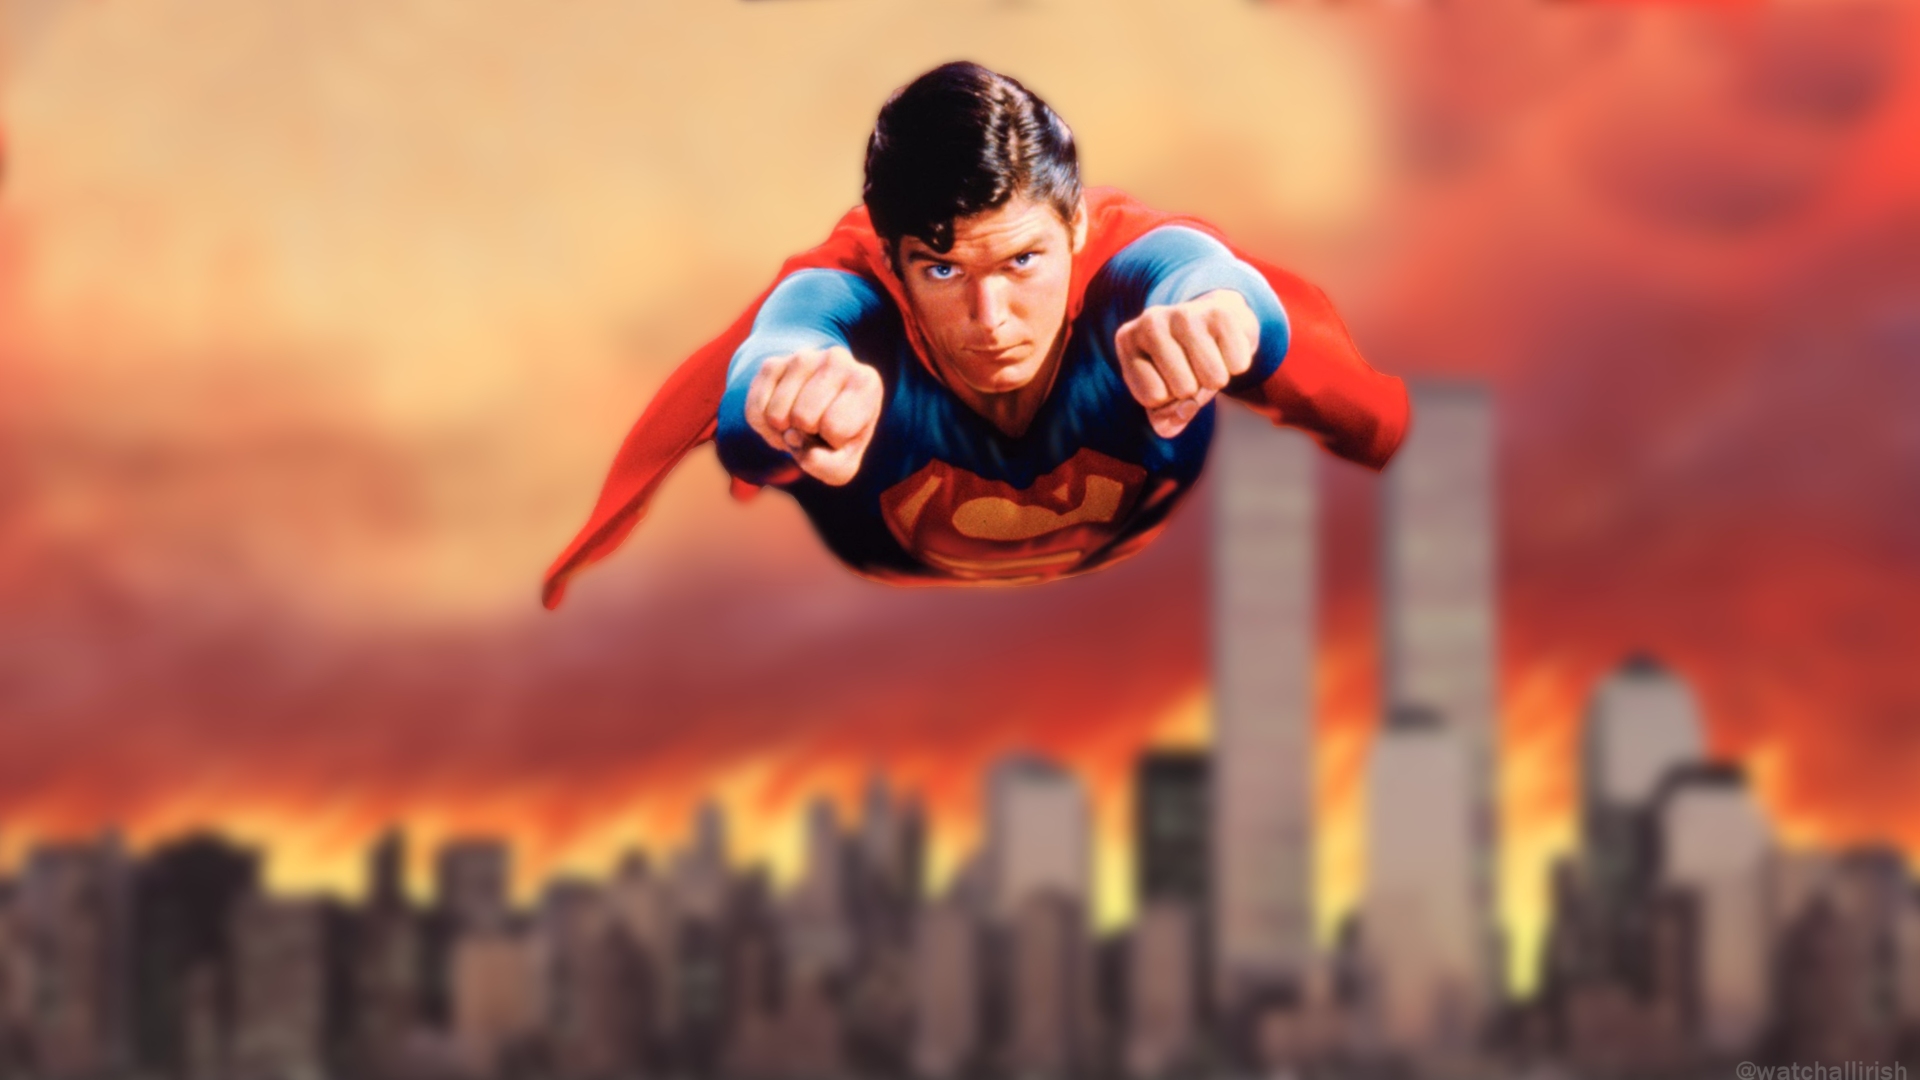 Superman speed up. Супермен 2. Супермен 1978 полет Супермена. Супергерой фон. Супермен в полете.